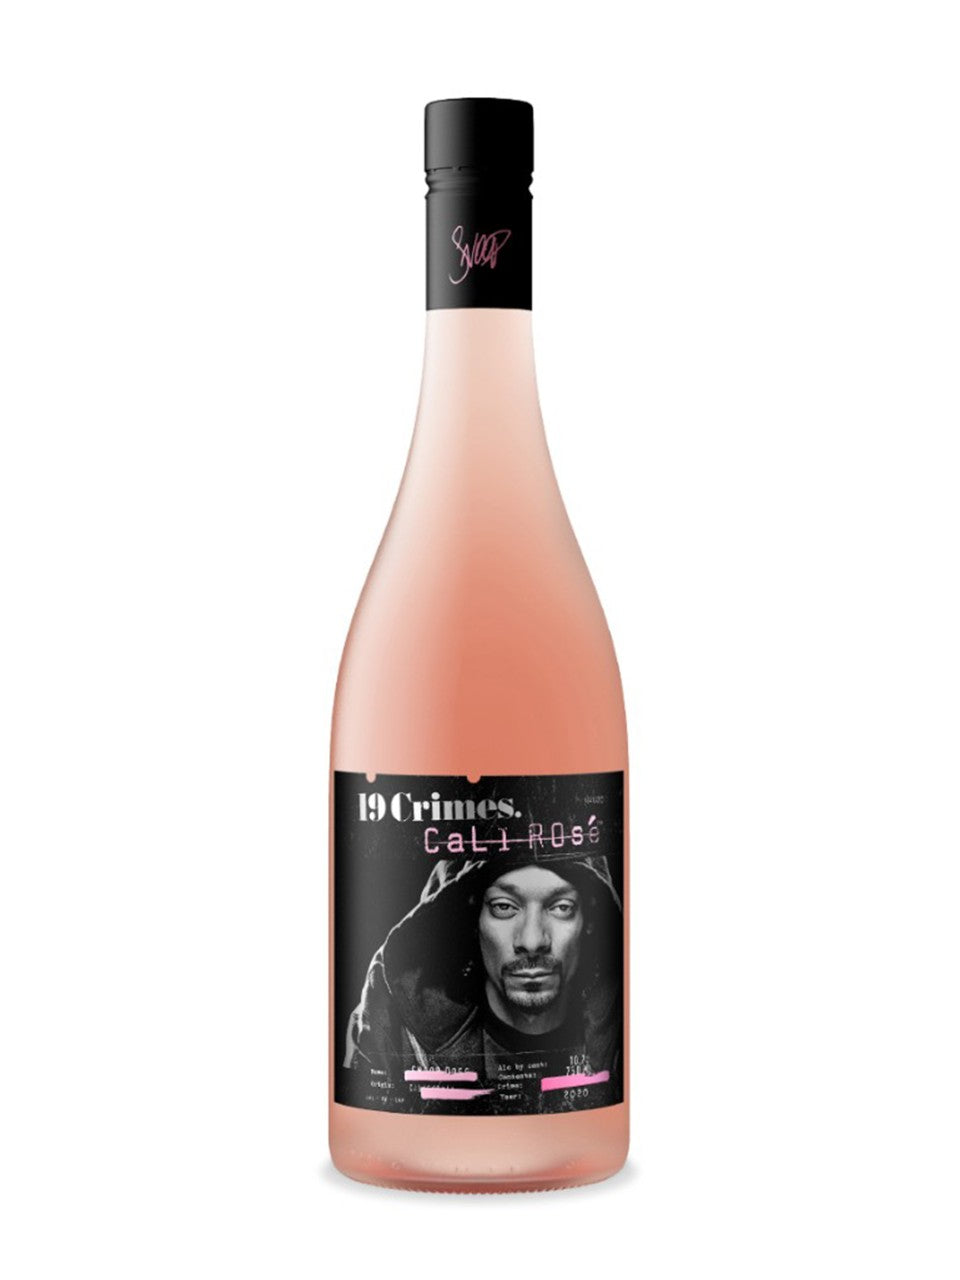 19 Crimes Snoop Dogg Cali Rosé 750 ml bottle